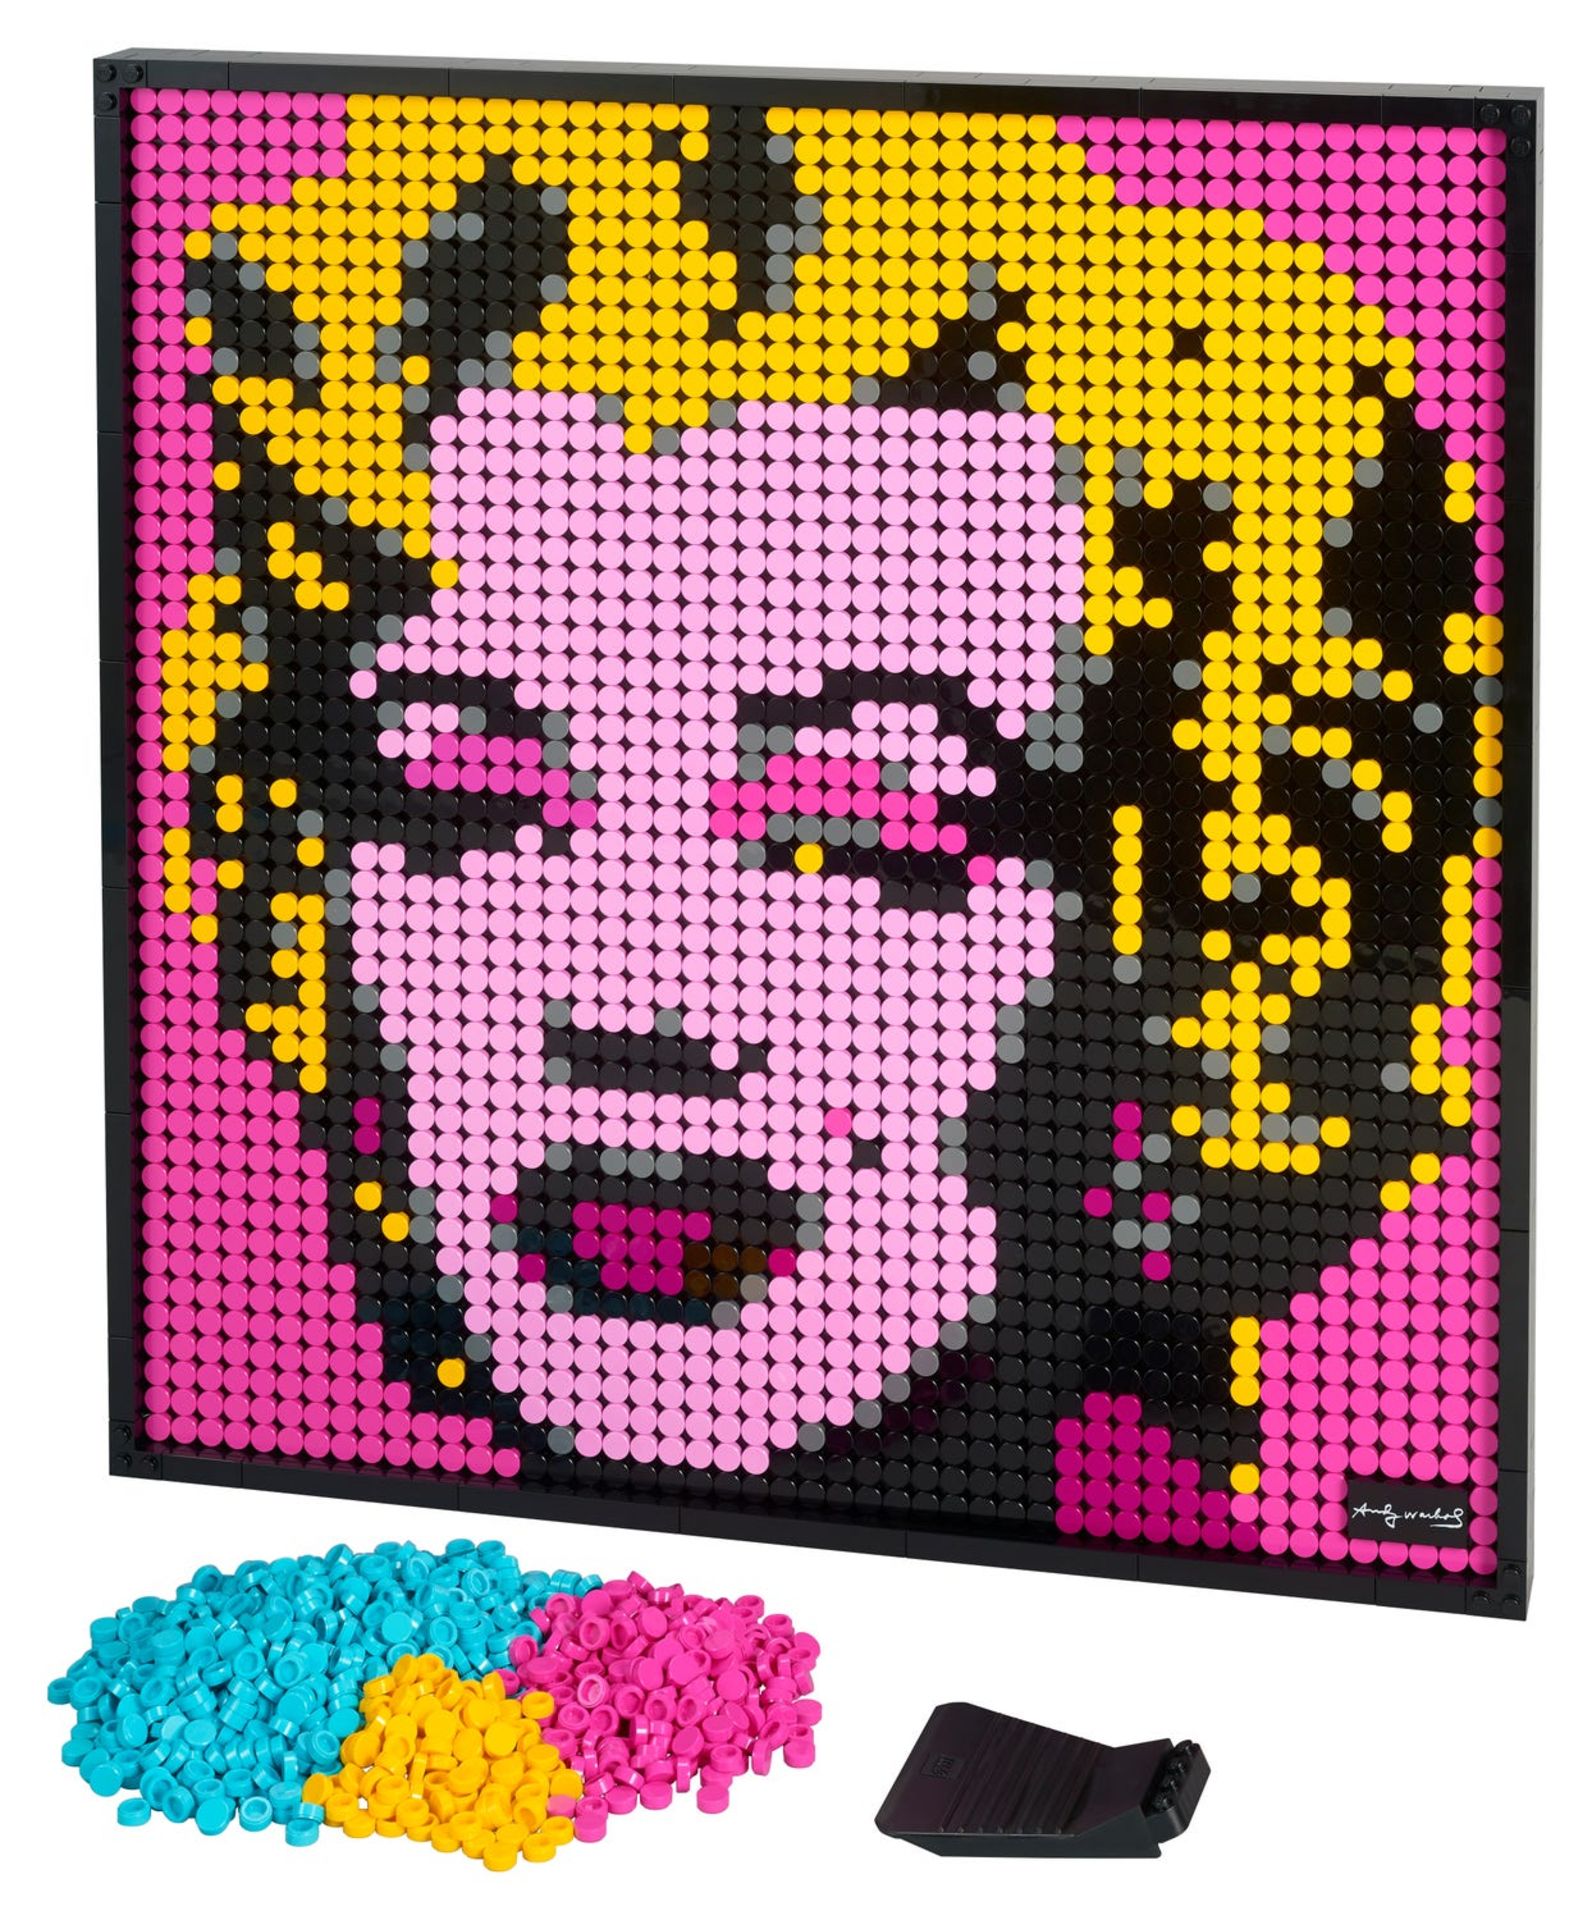 1 x Lego Art 31197 Andy Warhol's Marilyn Monroe set - Brand New RRP £90.00 - CL987 - Ref: